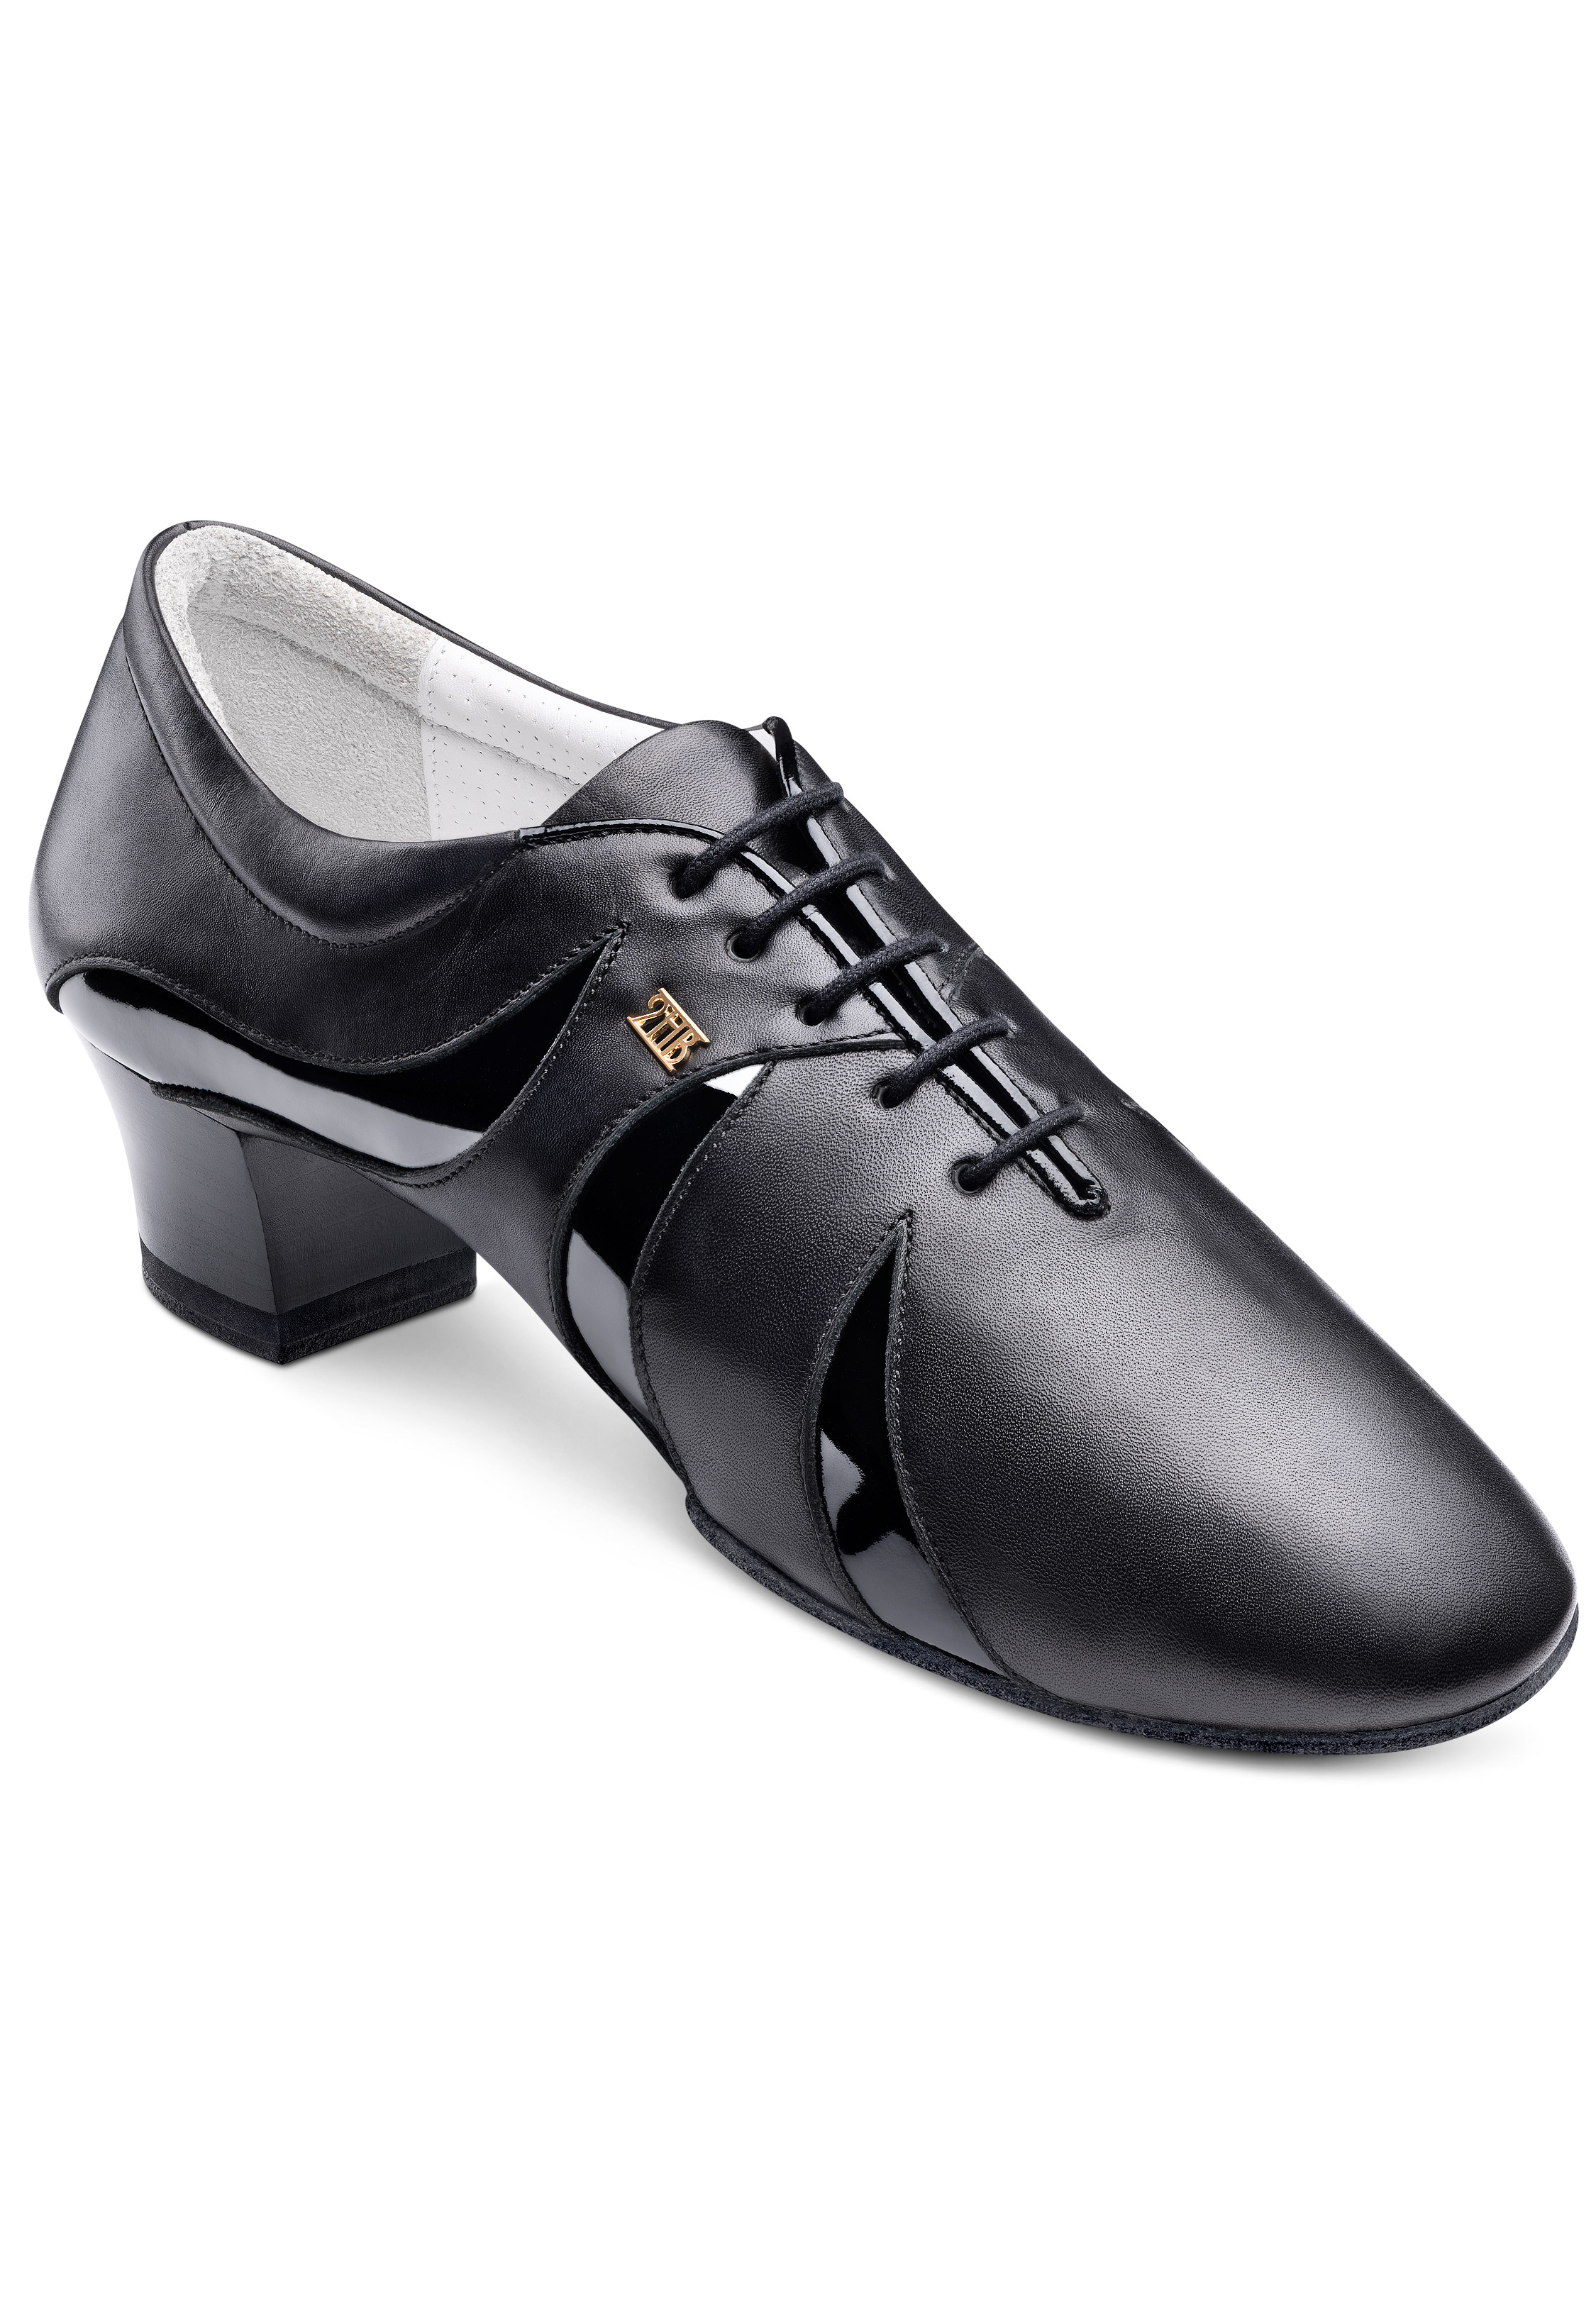 HROYL Dance Shoes for Children/Mens Lace-up Jazz Latin Mordern Ballroom Dance Shoes 1.5 Low Heel Suede Sole,Model 238 